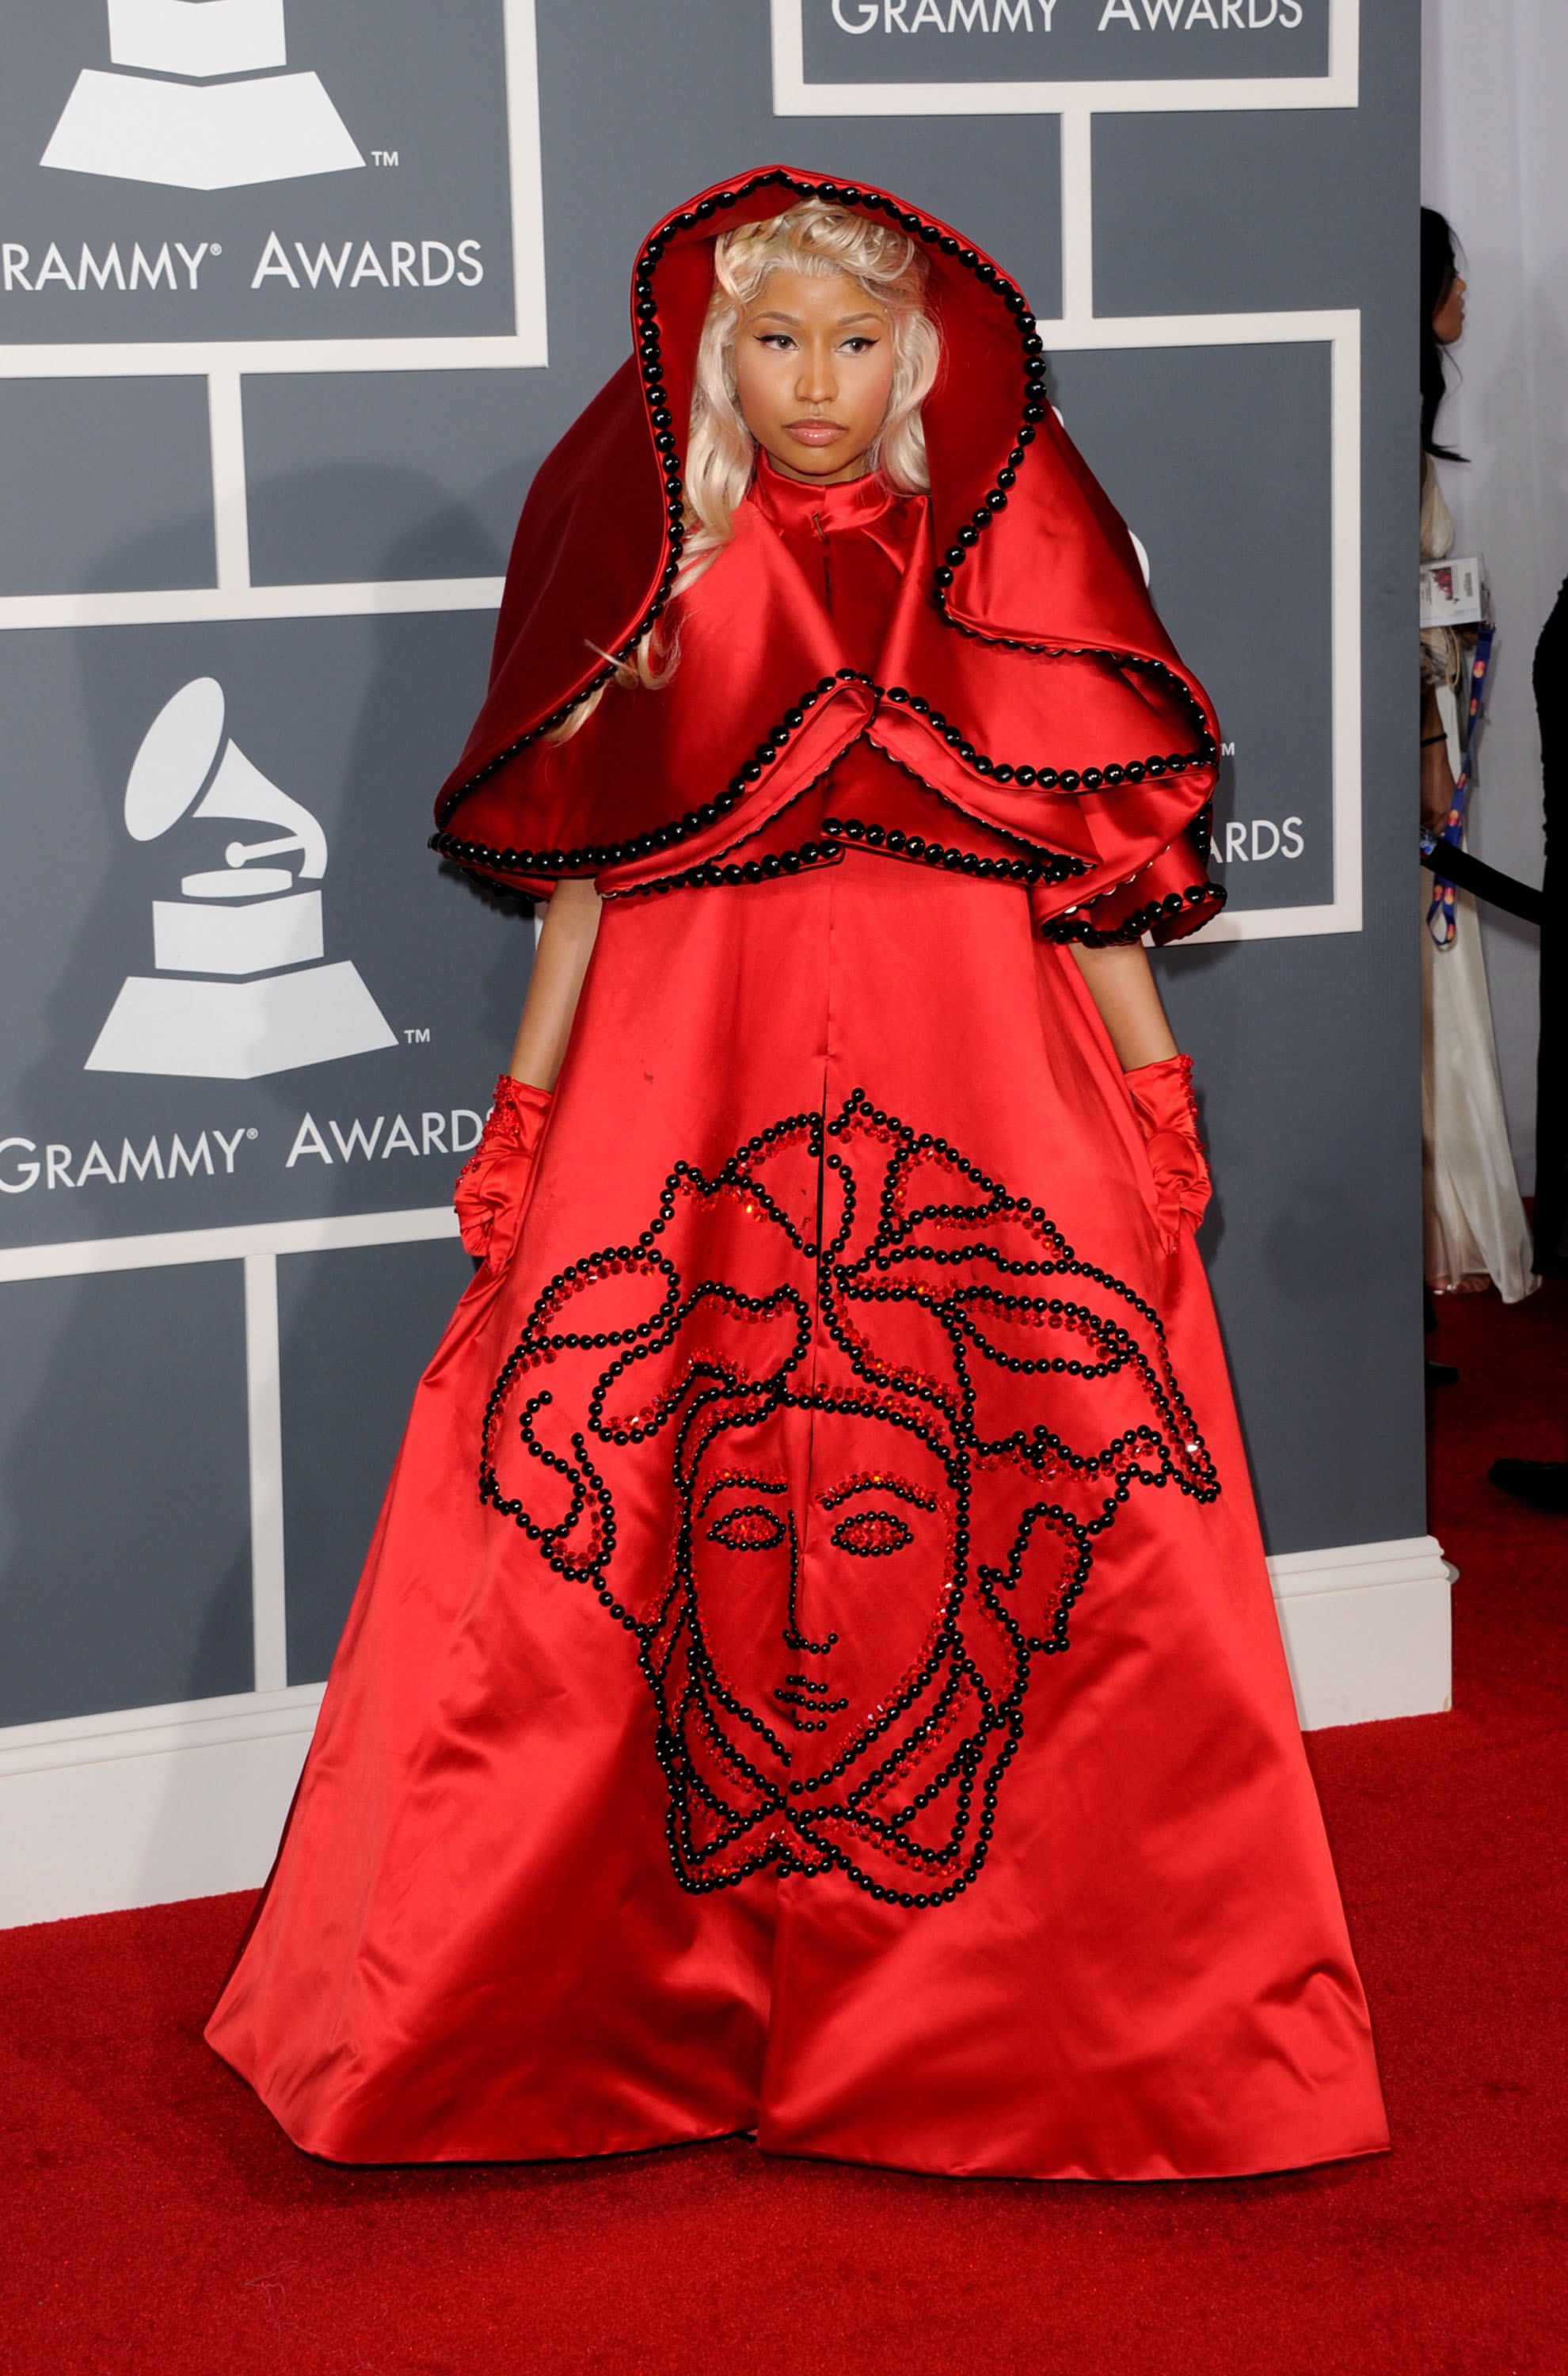 Singer Nicki Minaj arrives at the 54th Annual GRAMMY Awards held at Staples Center on February 12, 2012 in Los Angeles, California.